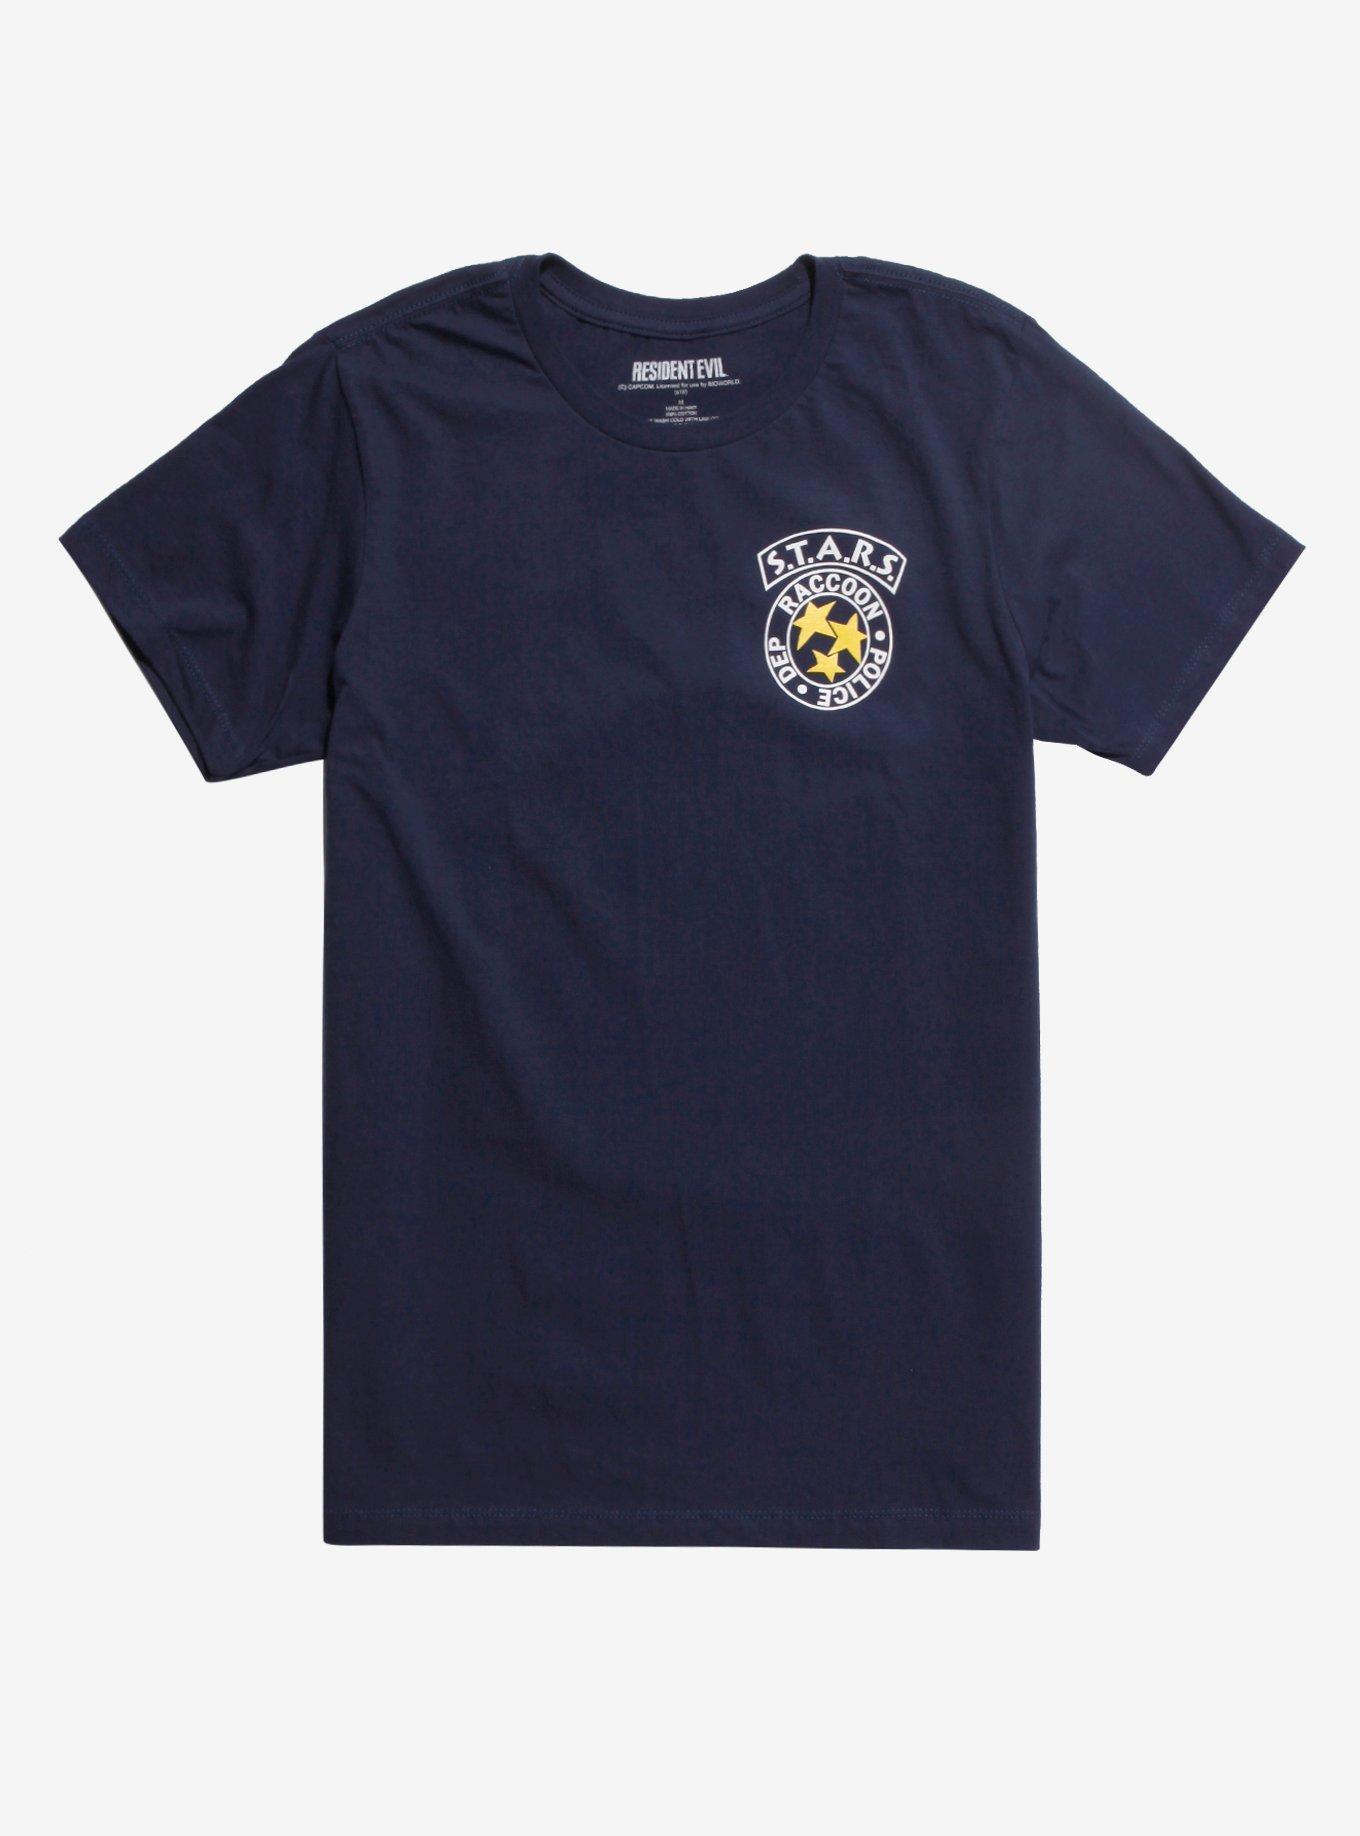 Cloud City 7 Resident Evil Stars Police Logo Mens T-Shirt